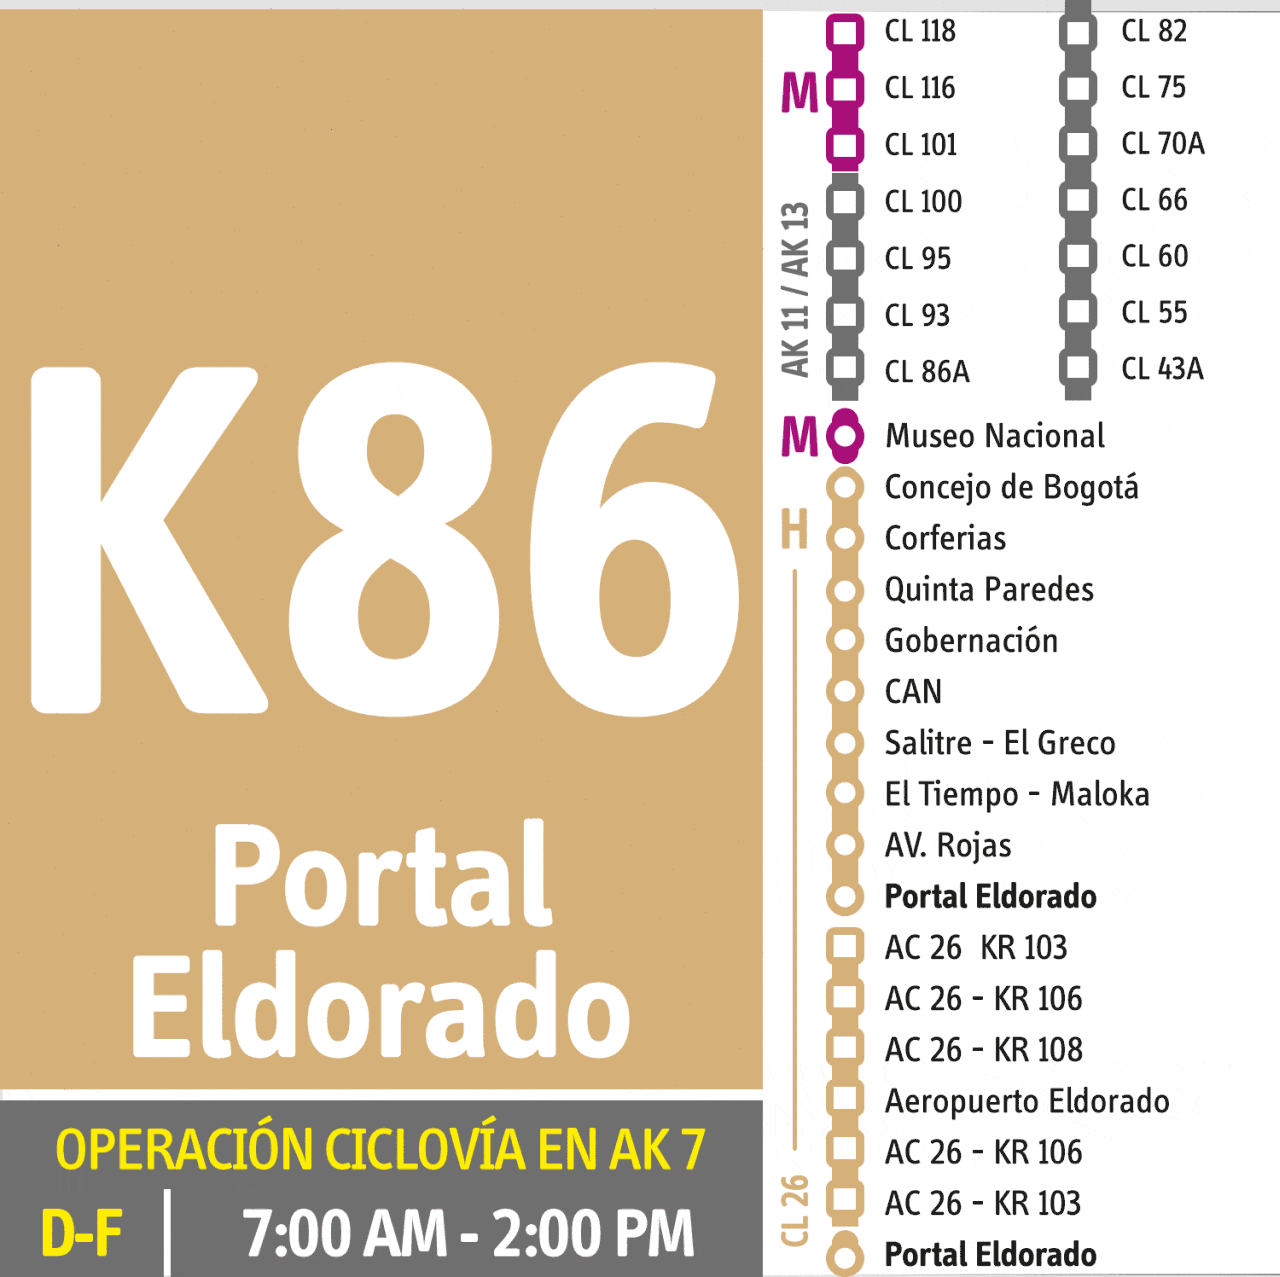 Ruta dual K86, con destino Aeropuerto Eldorado, durante celebración de ciclovía